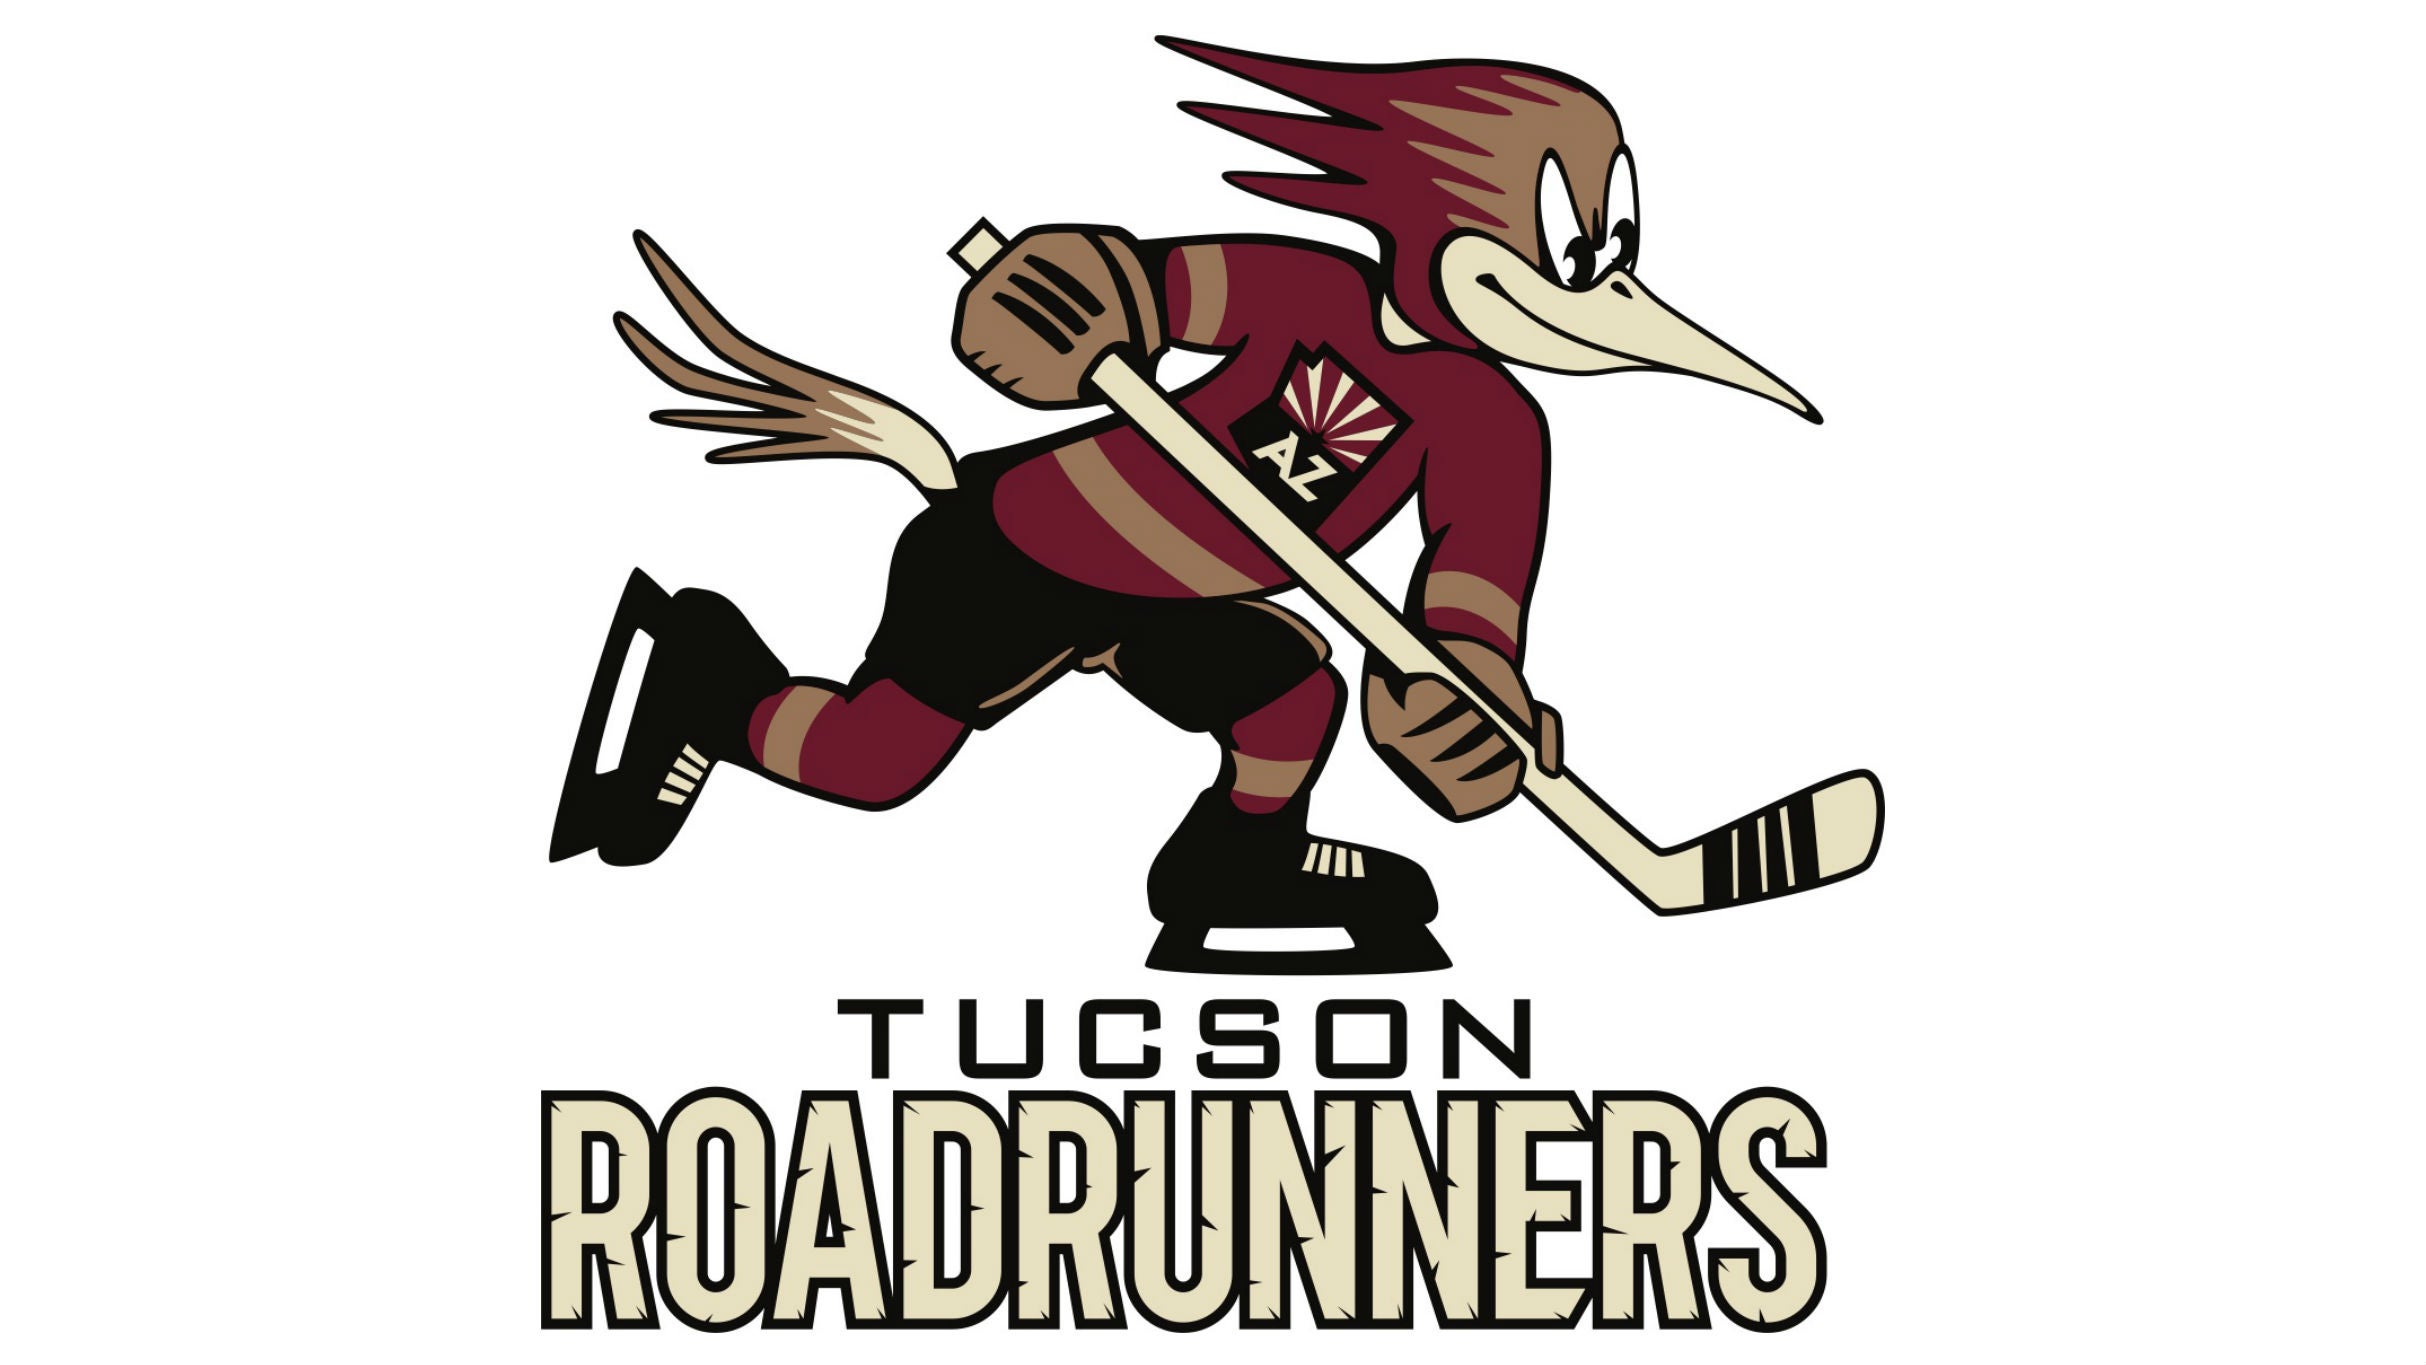 Tucson Roadrunners vs. San Diego Gulls at Tucson Arena